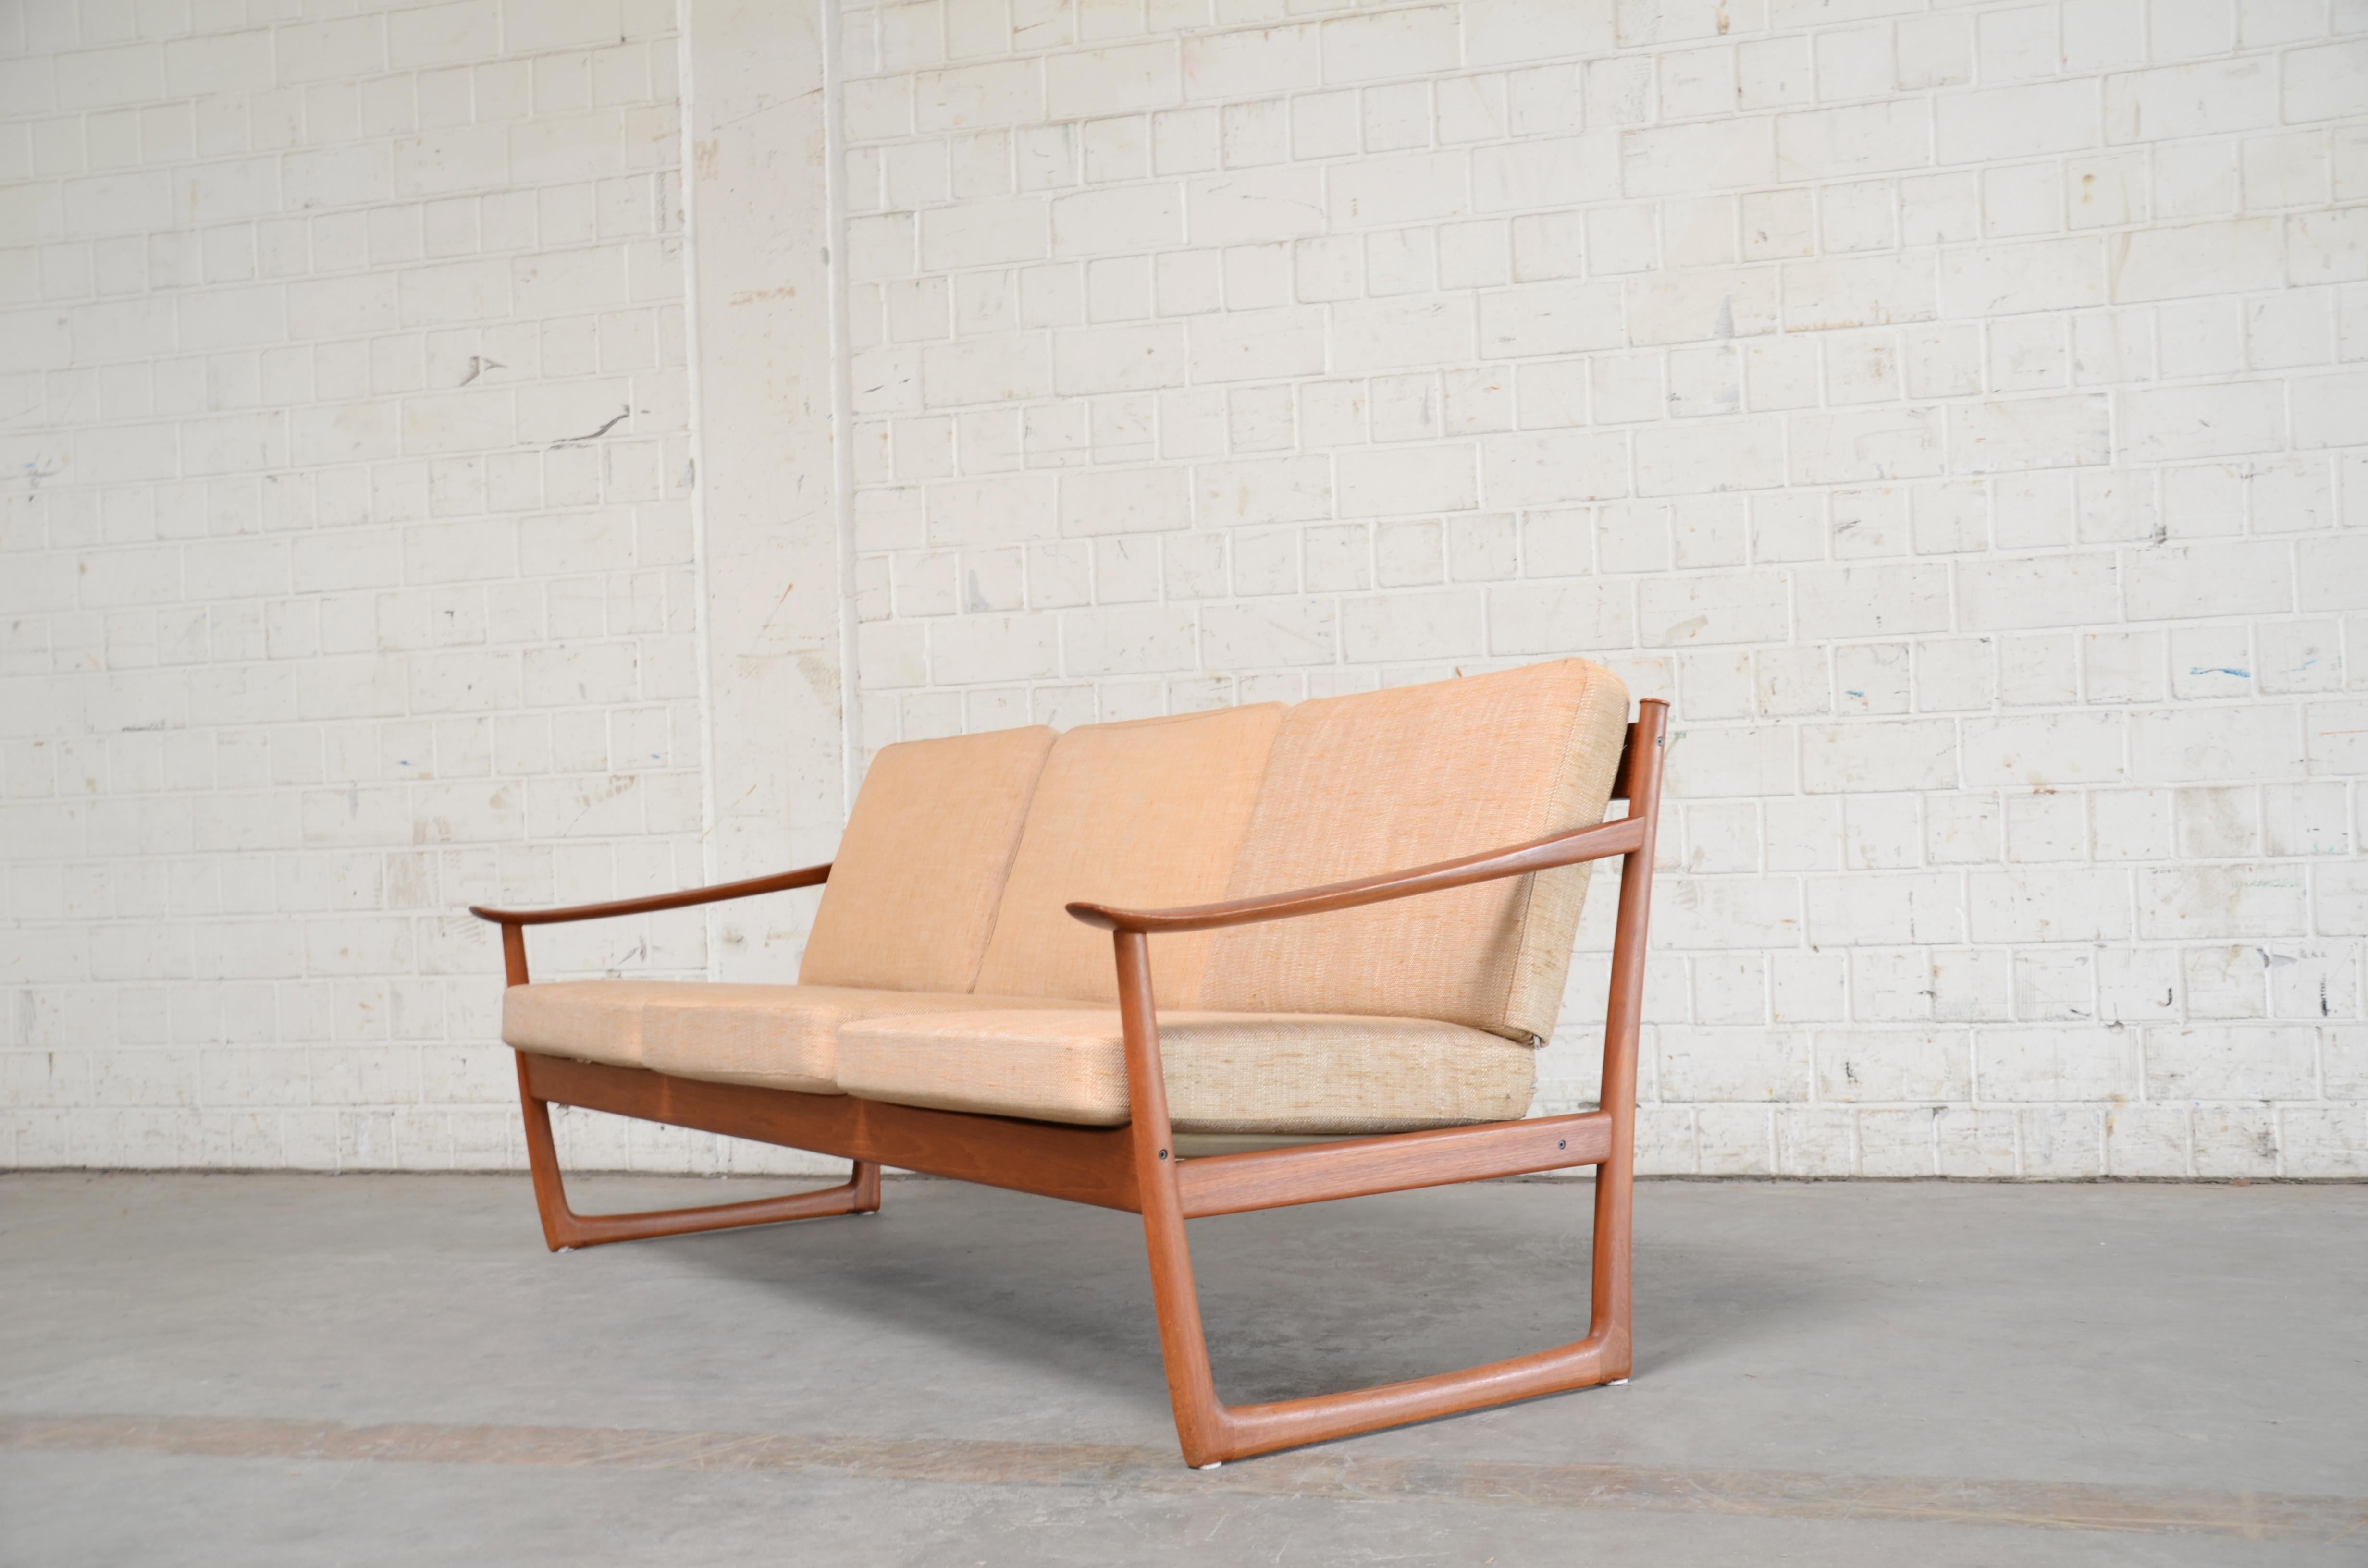 France & Son/ France and Daverkosen FD 130 sofa by Peter Hvidt & Orla Mølgaard, midcentury.
Teak wood and orange fabric.
Danish modern organic design.
Great curved armrest.

